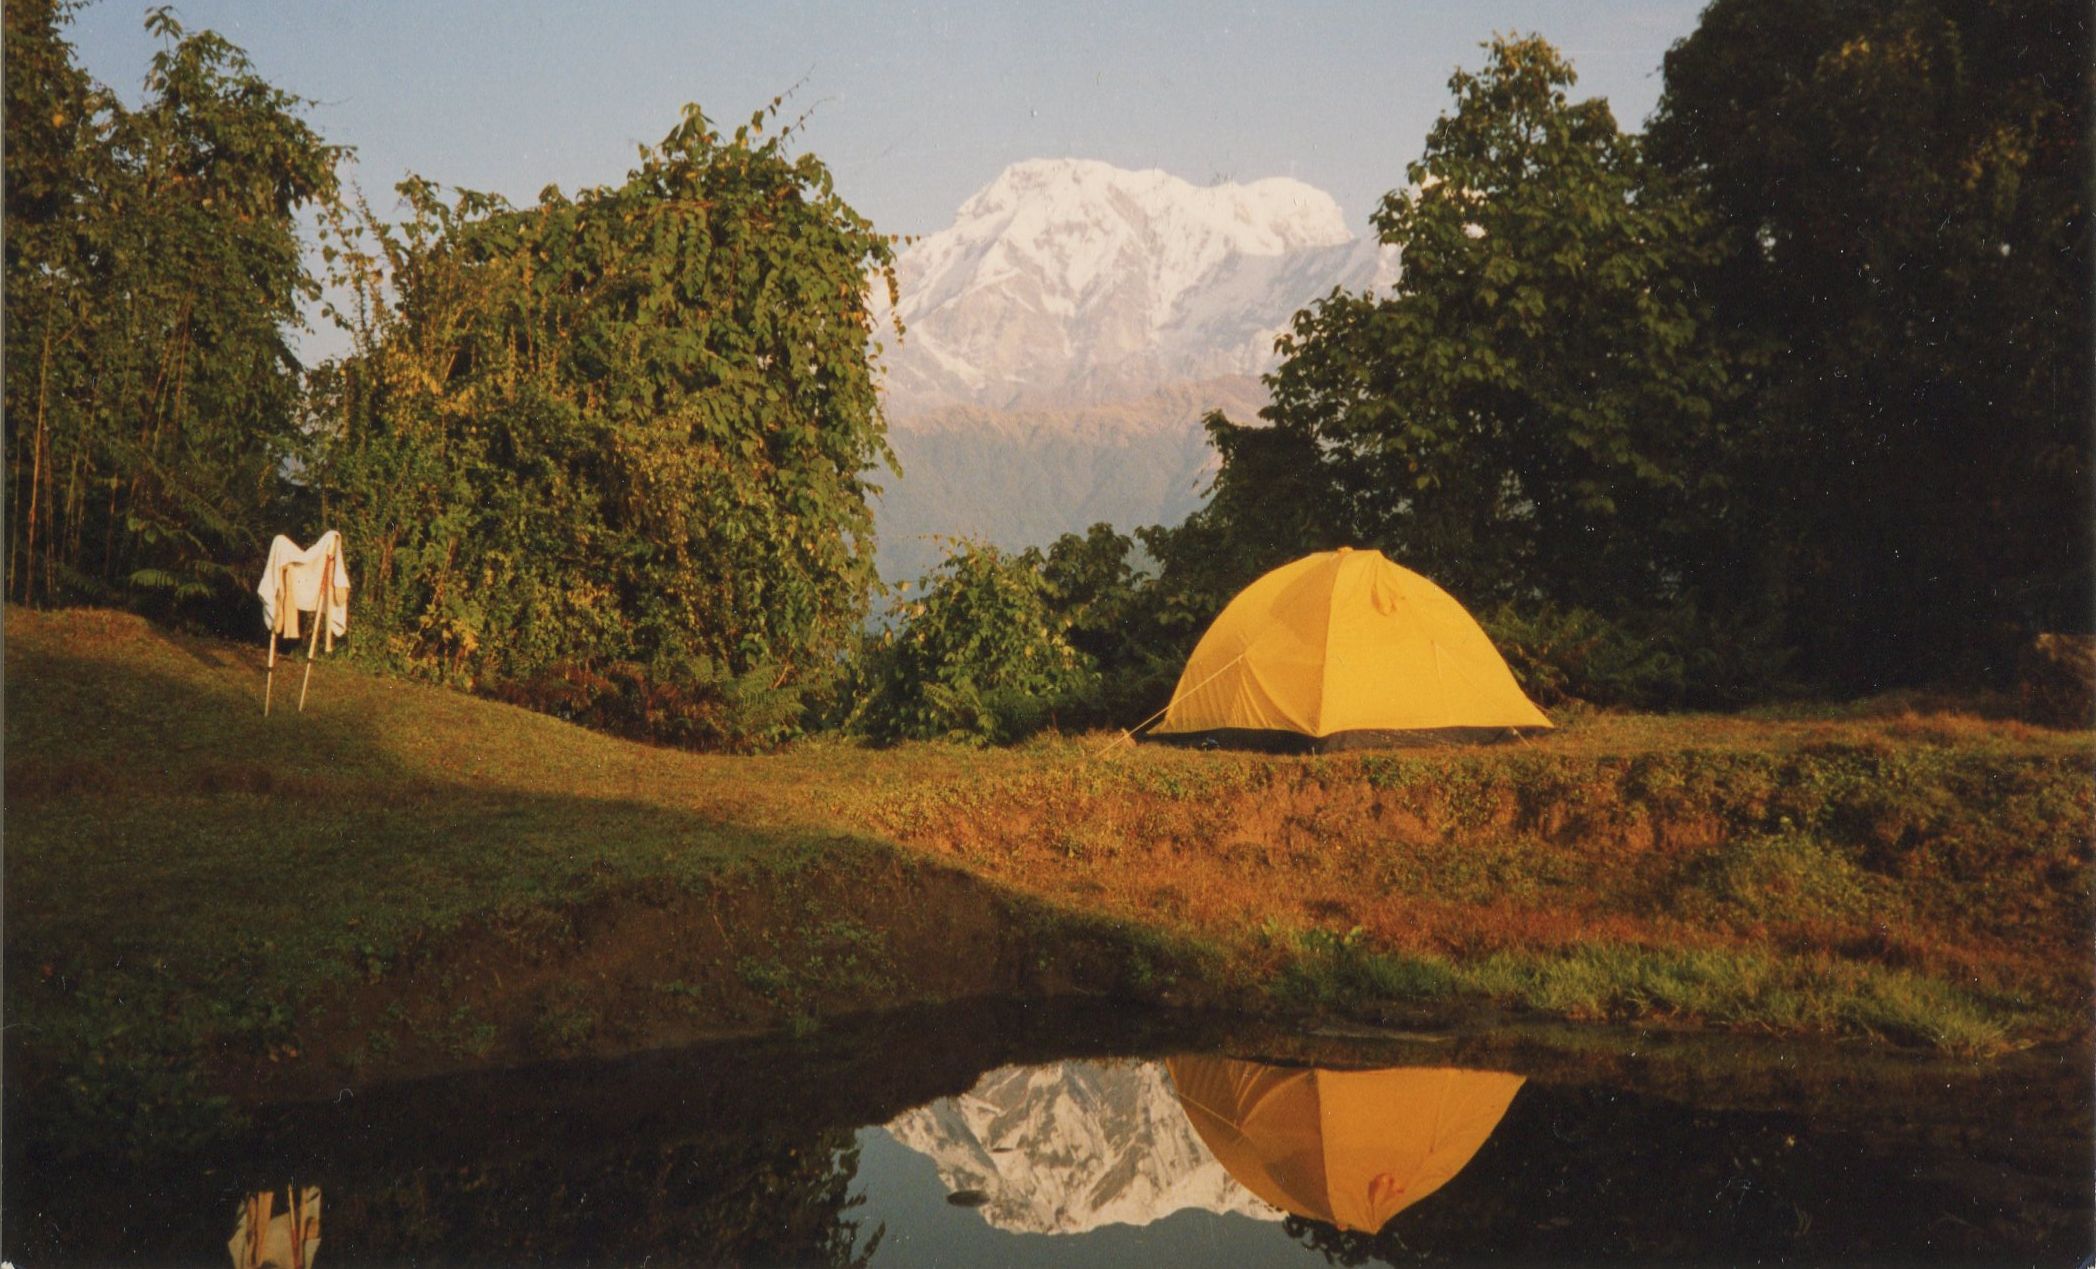 Annapurna South Peak from camp at Kumai